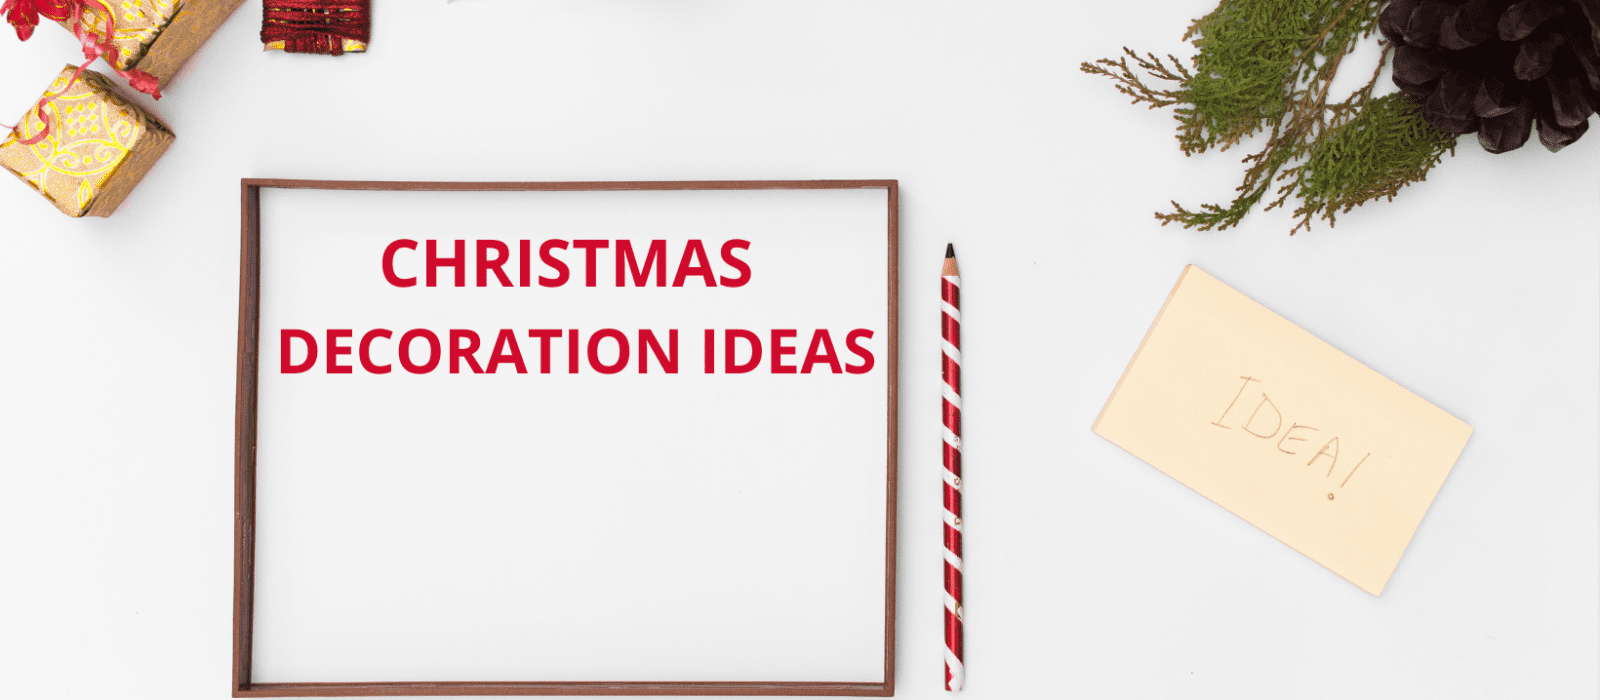 CHRISTMAS DECORATION IDEAS